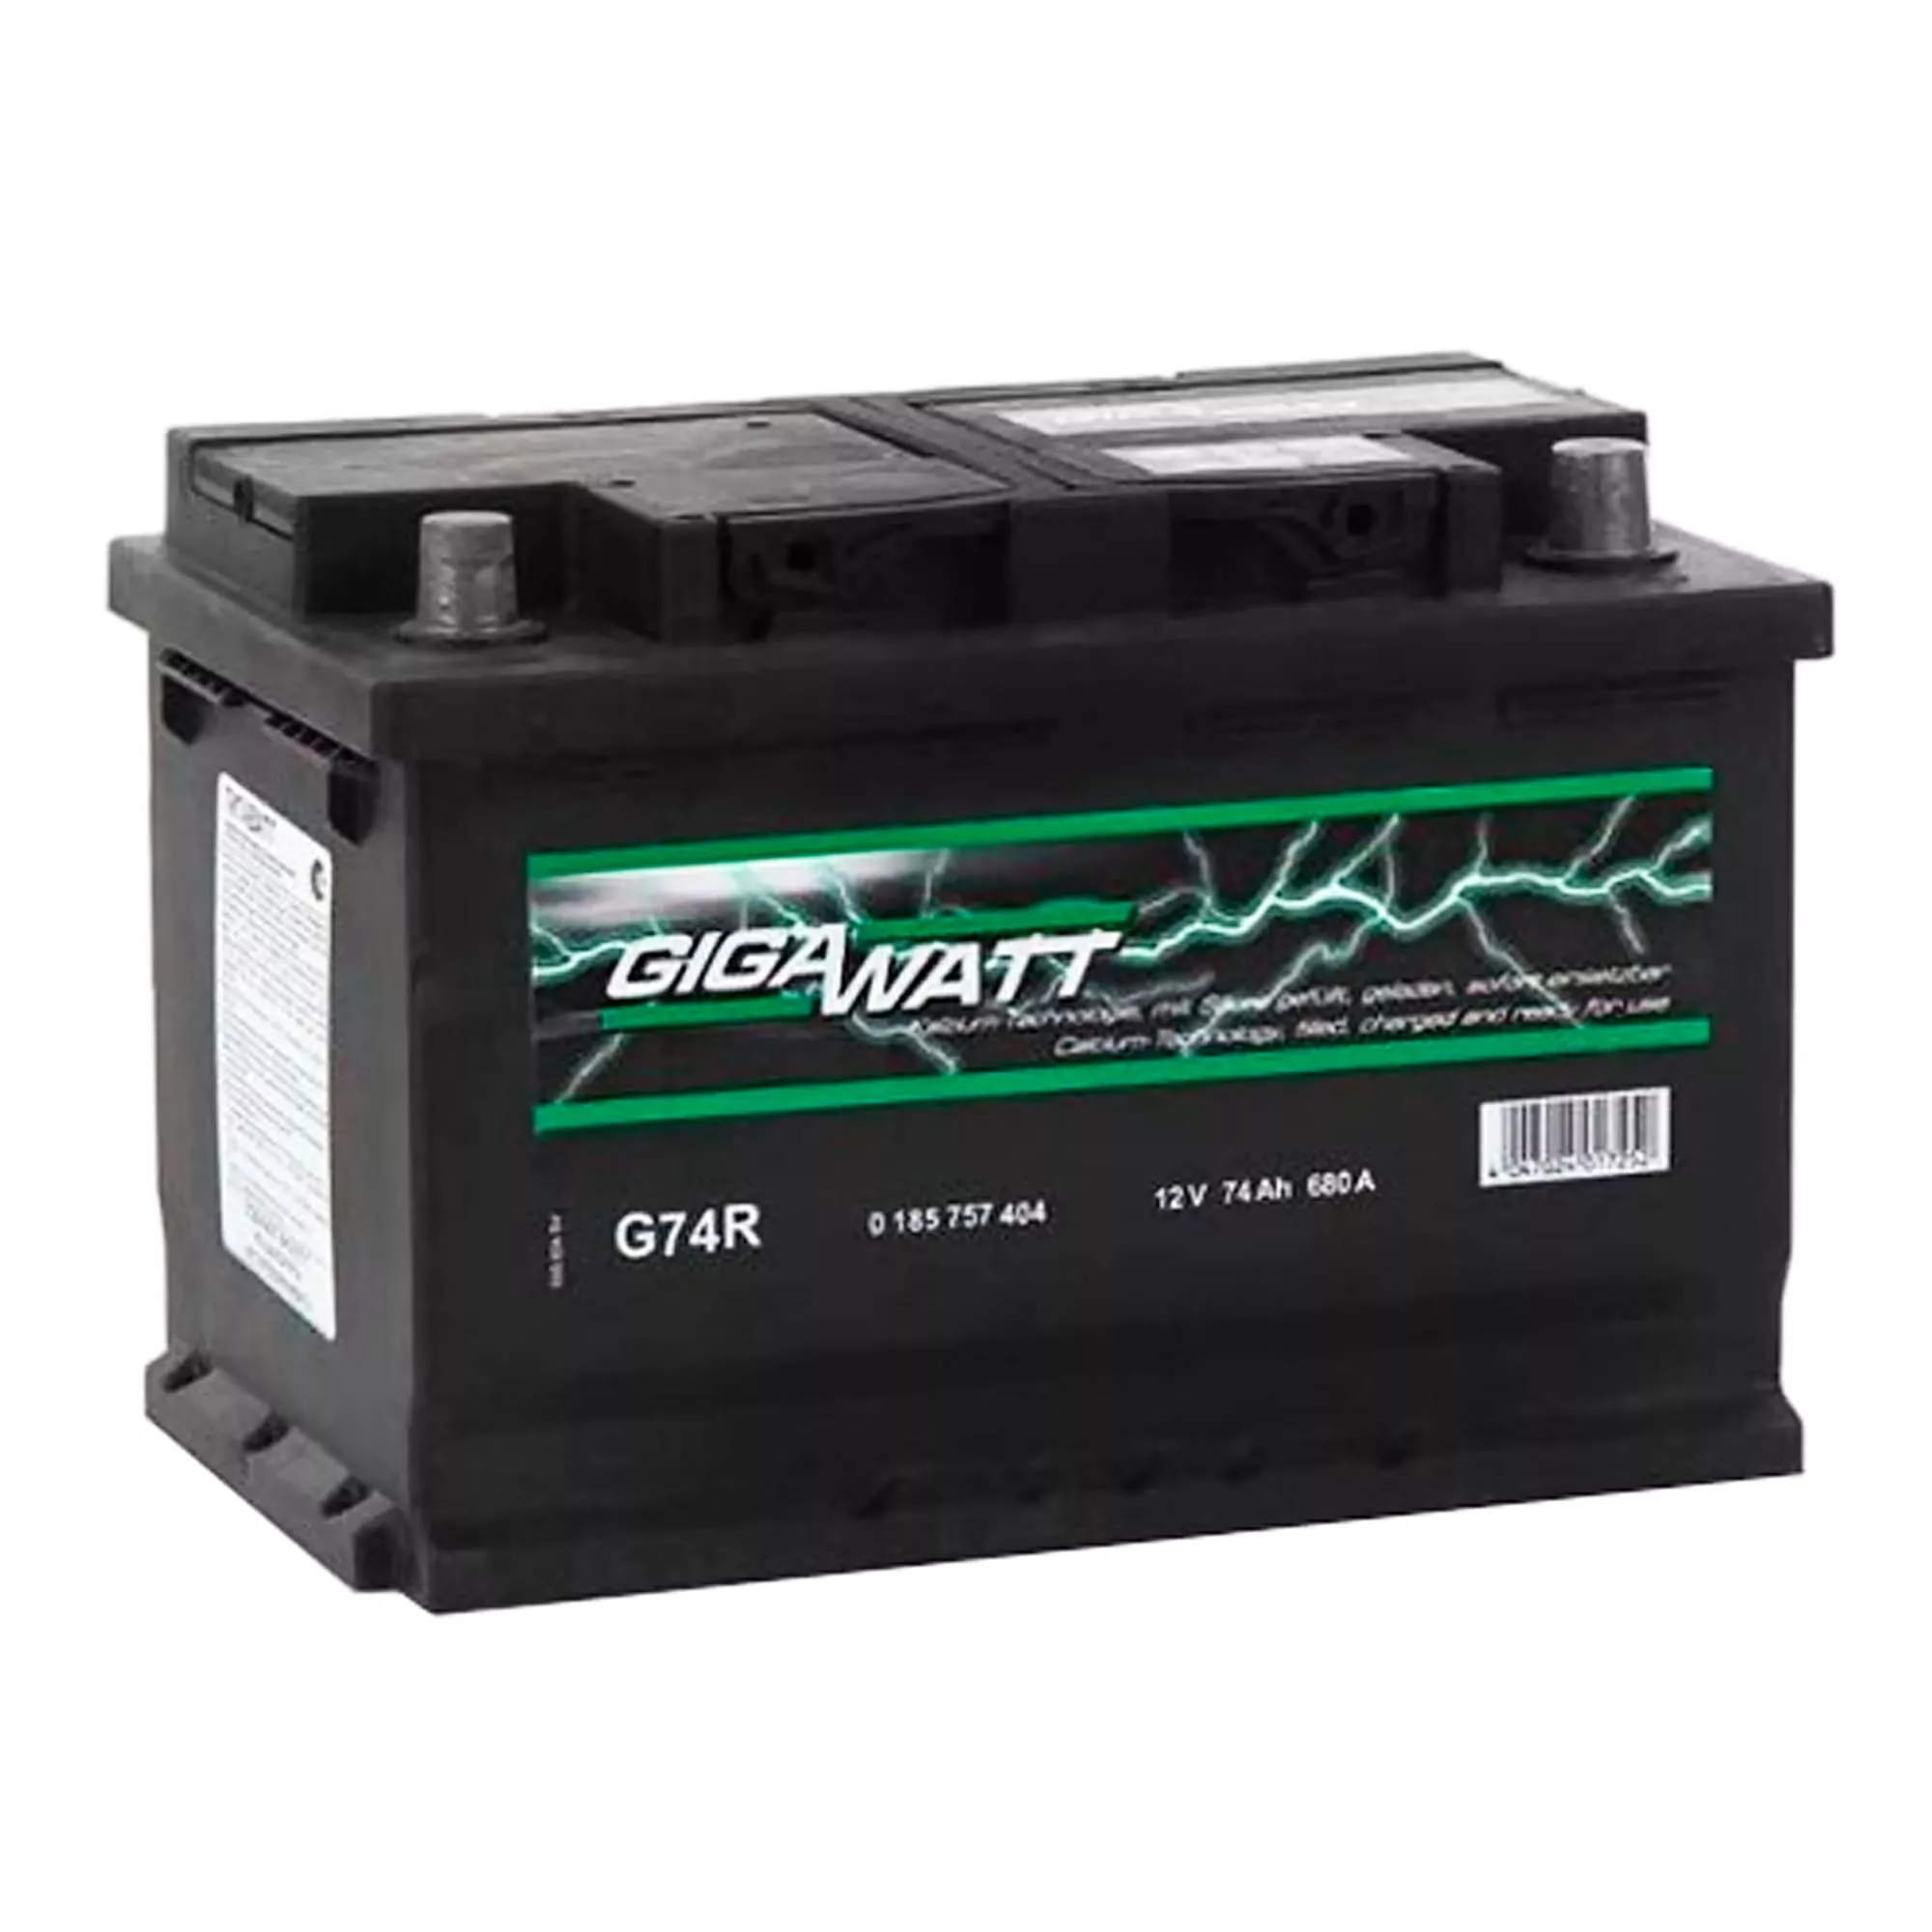 Автомобильный аккумулятор GIGAWATT G74R 6CT-74Ah 680A АзЕ (0185757404)